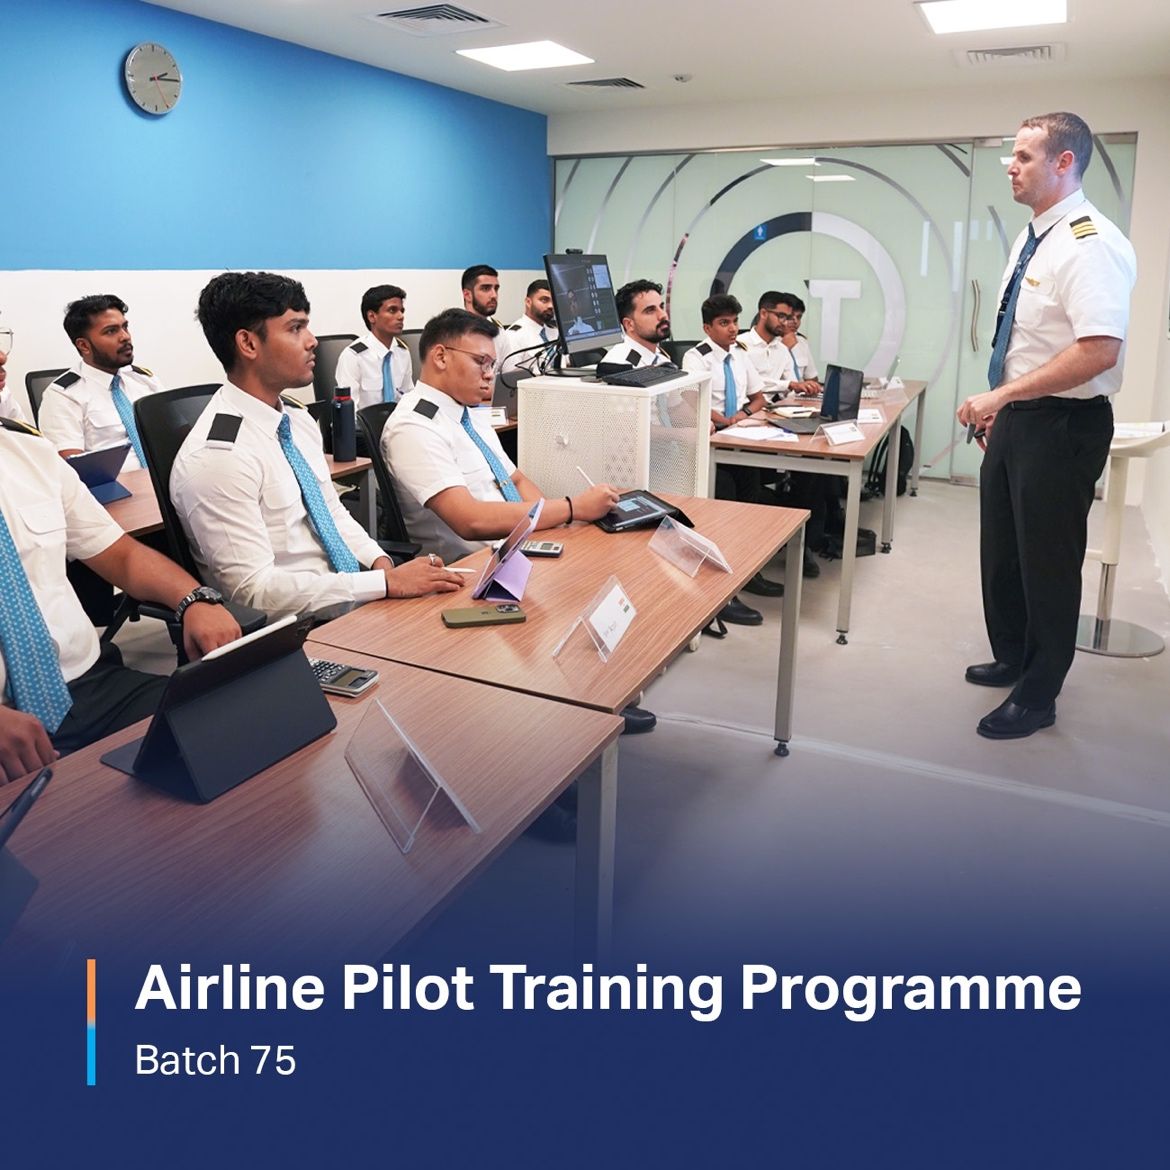 T3 Aviation Academy - Pilot Training AFM.aero